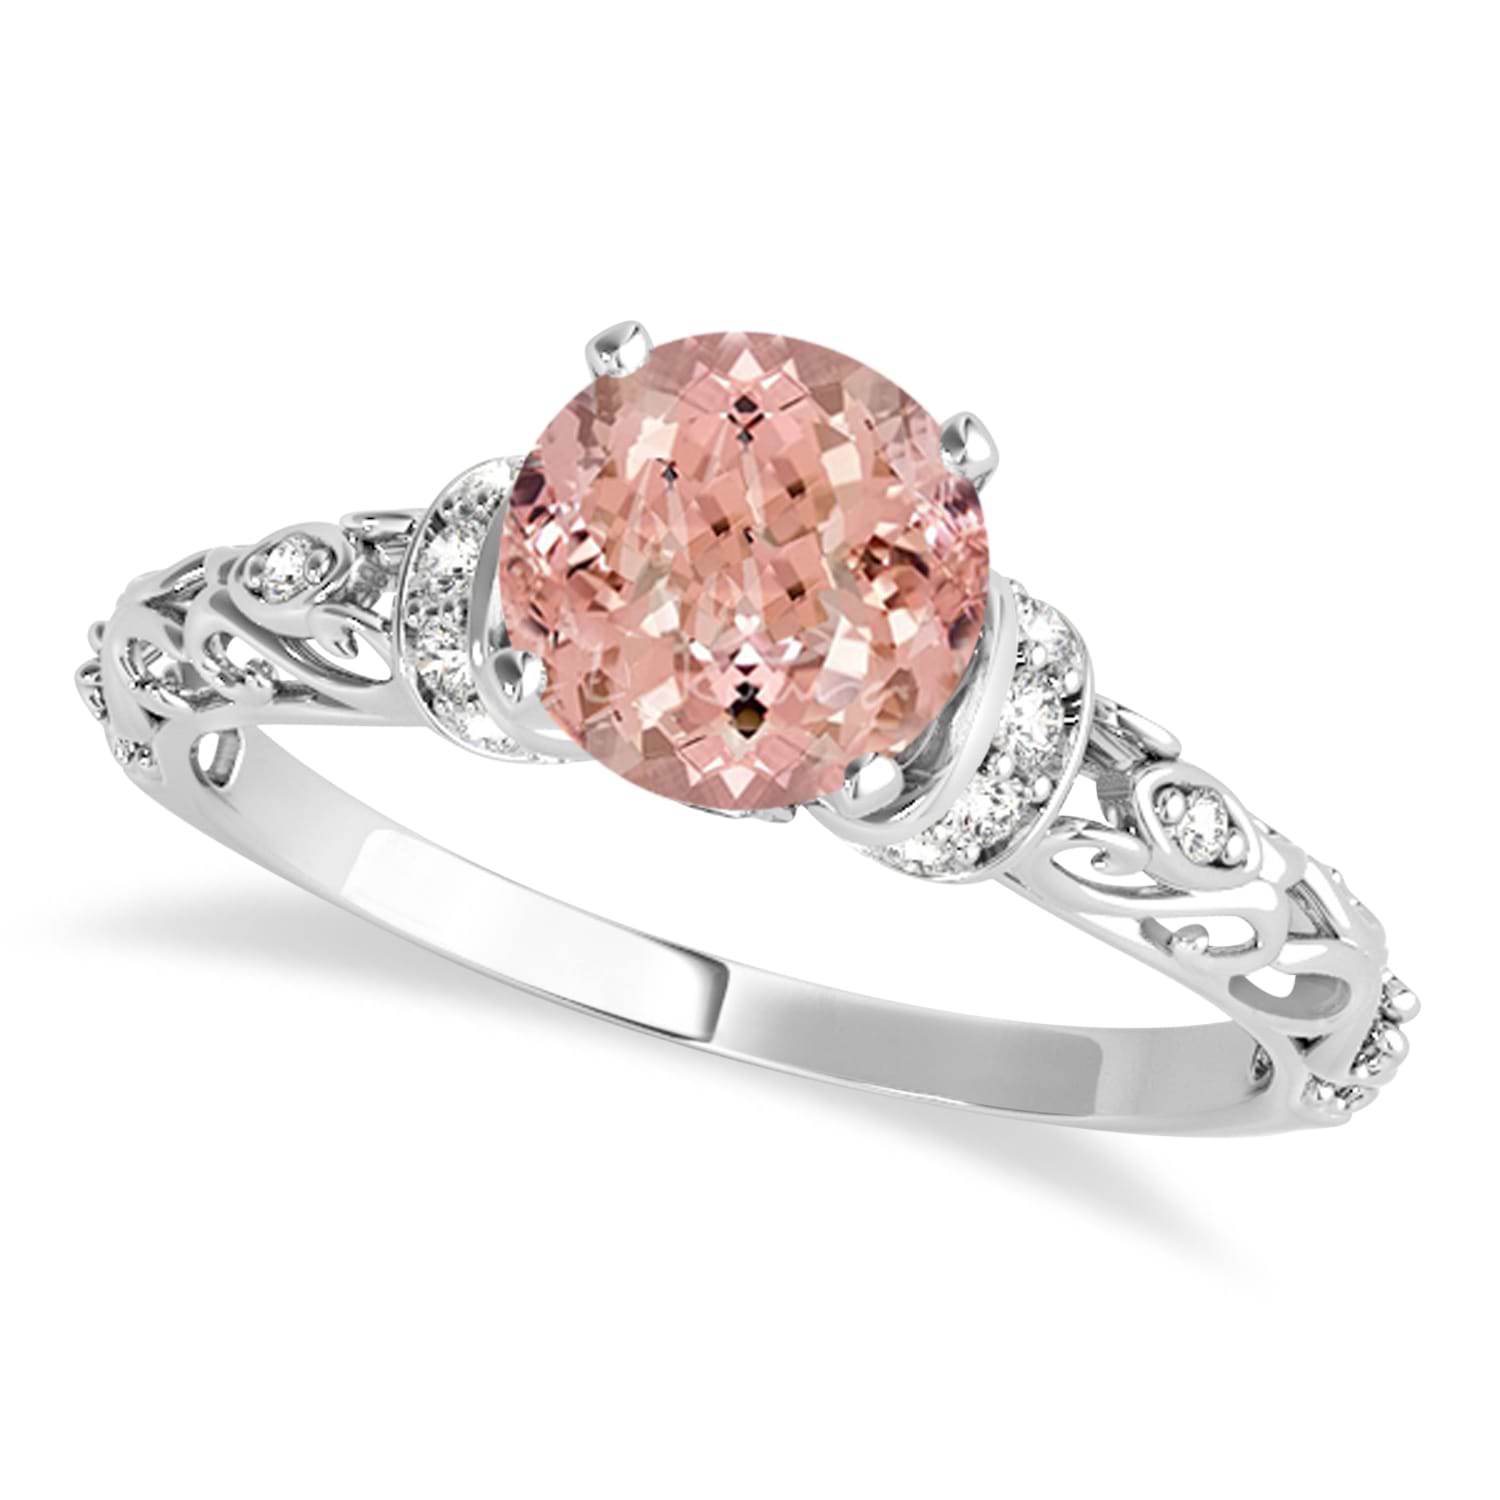 Morganite & Diamond Antique Style Engagement Ring 14k White Gold (1.12ct)